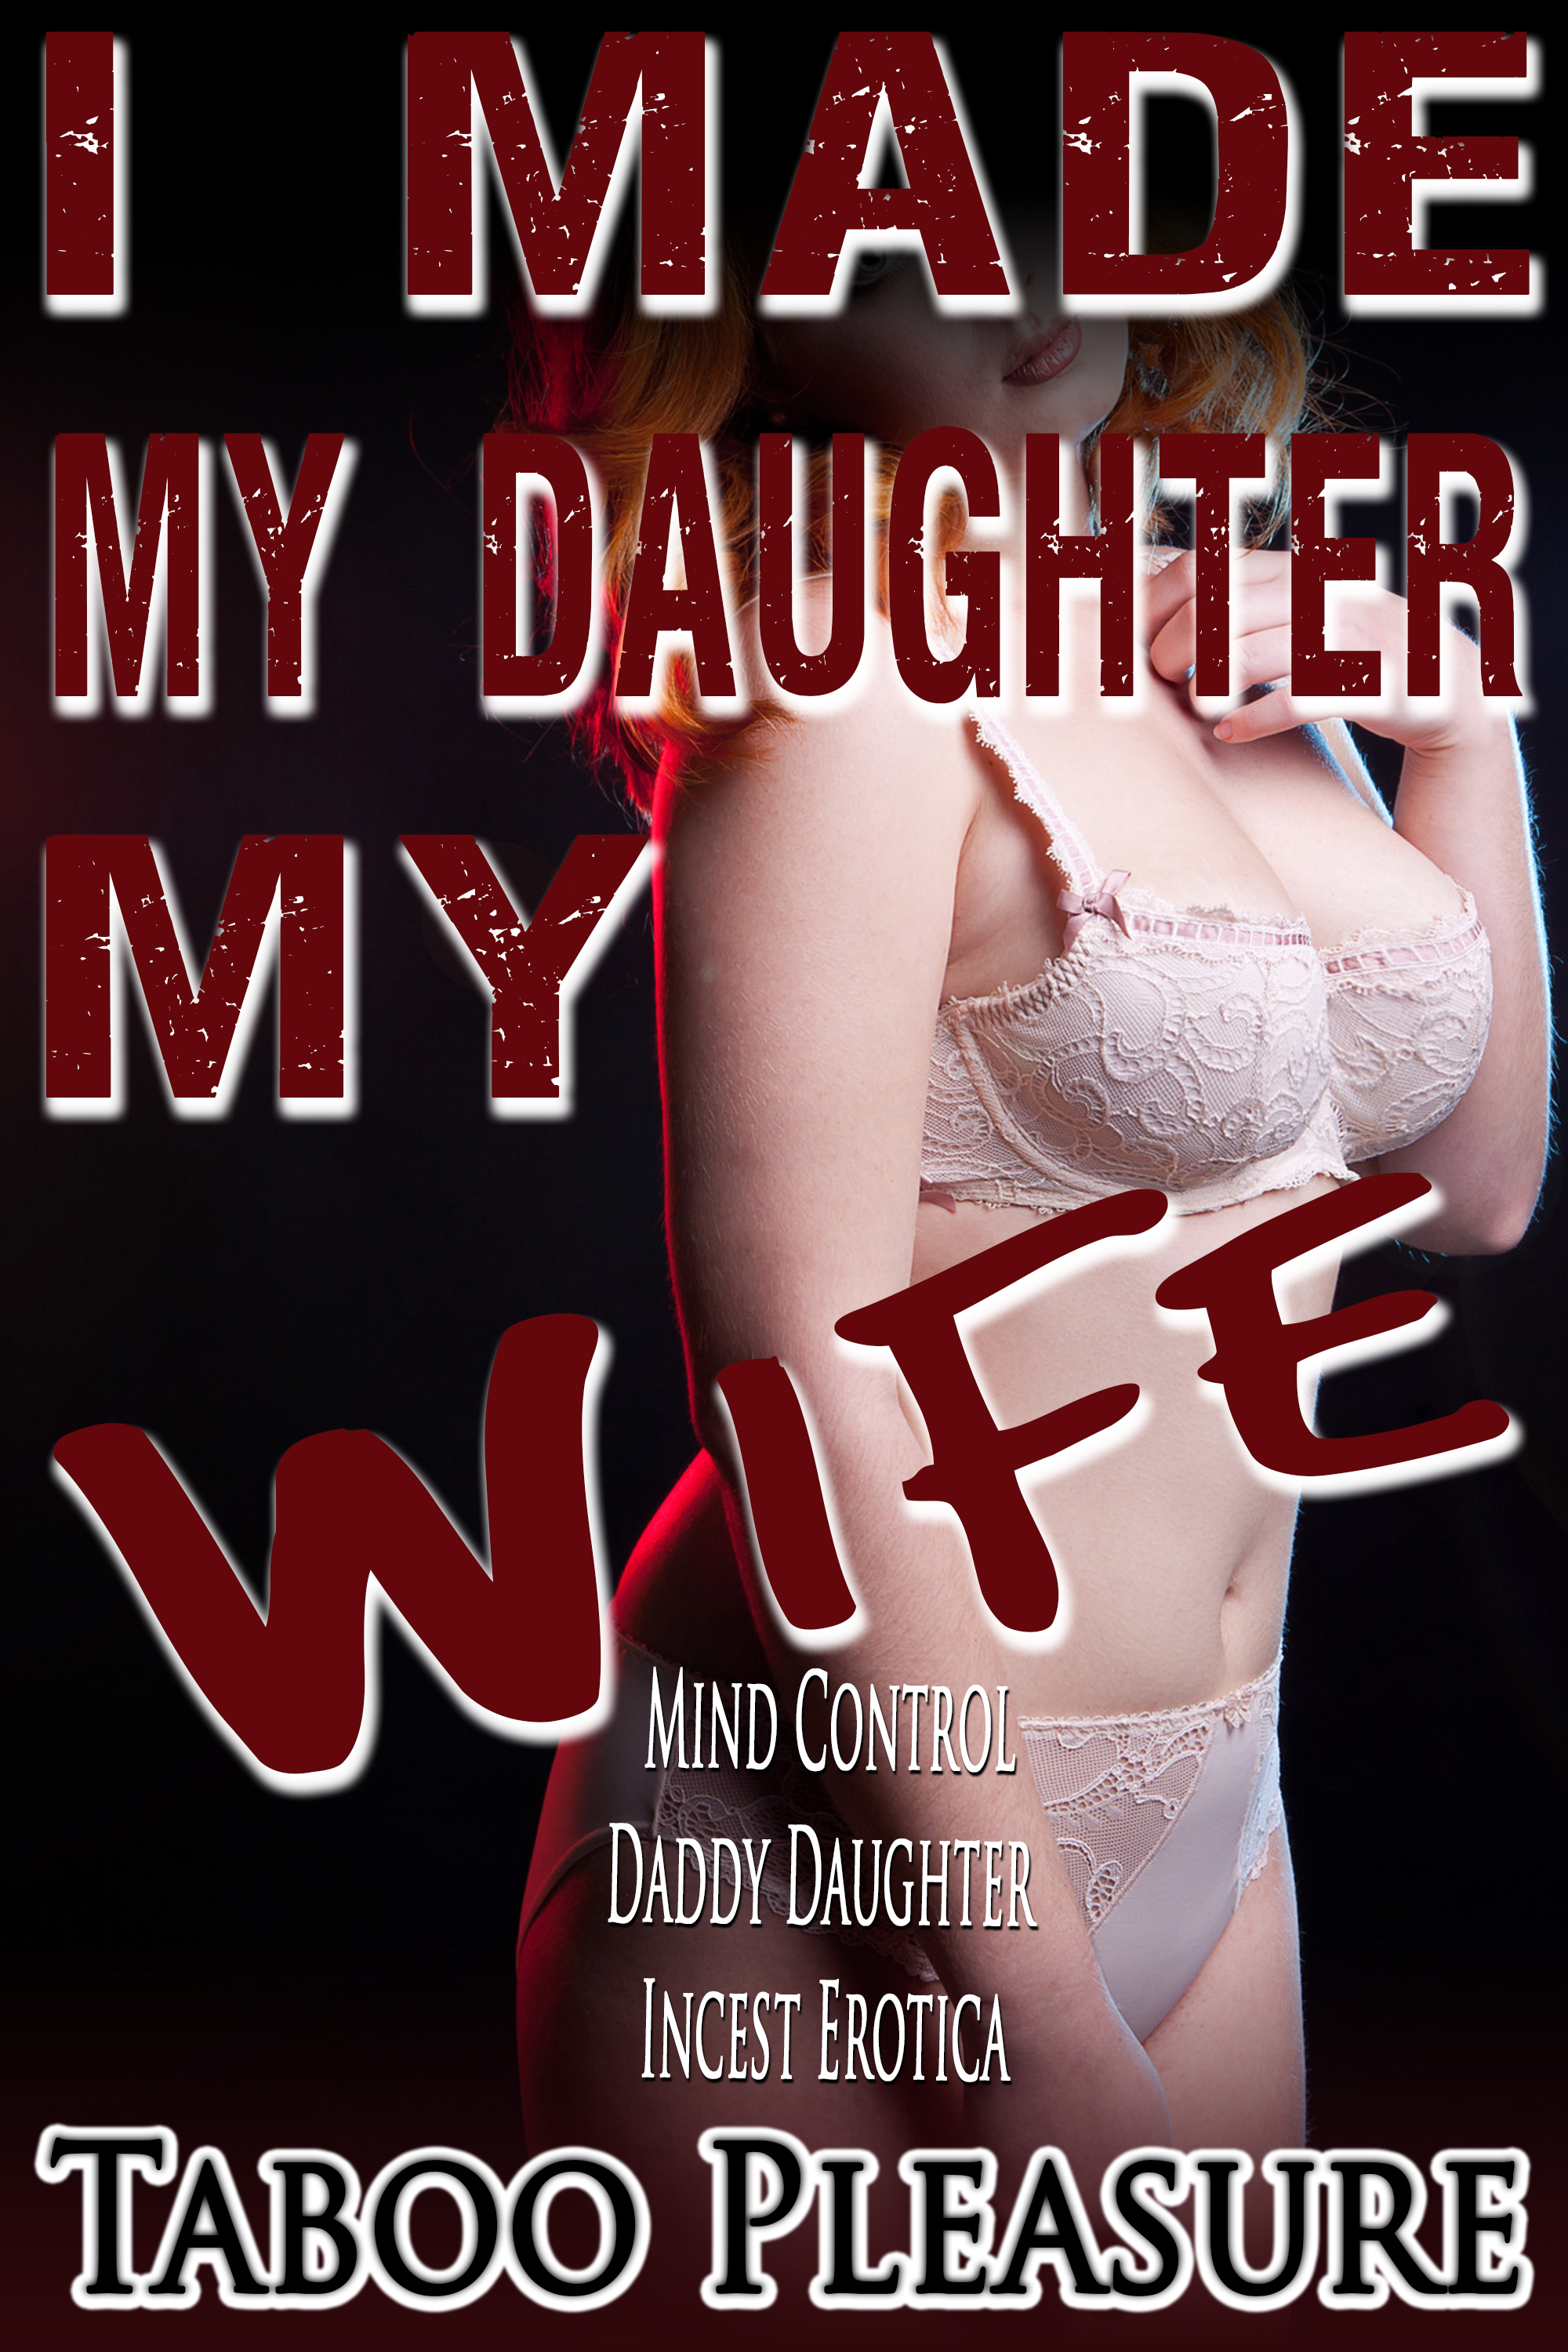 Daddy-Daughter Incest Erotica